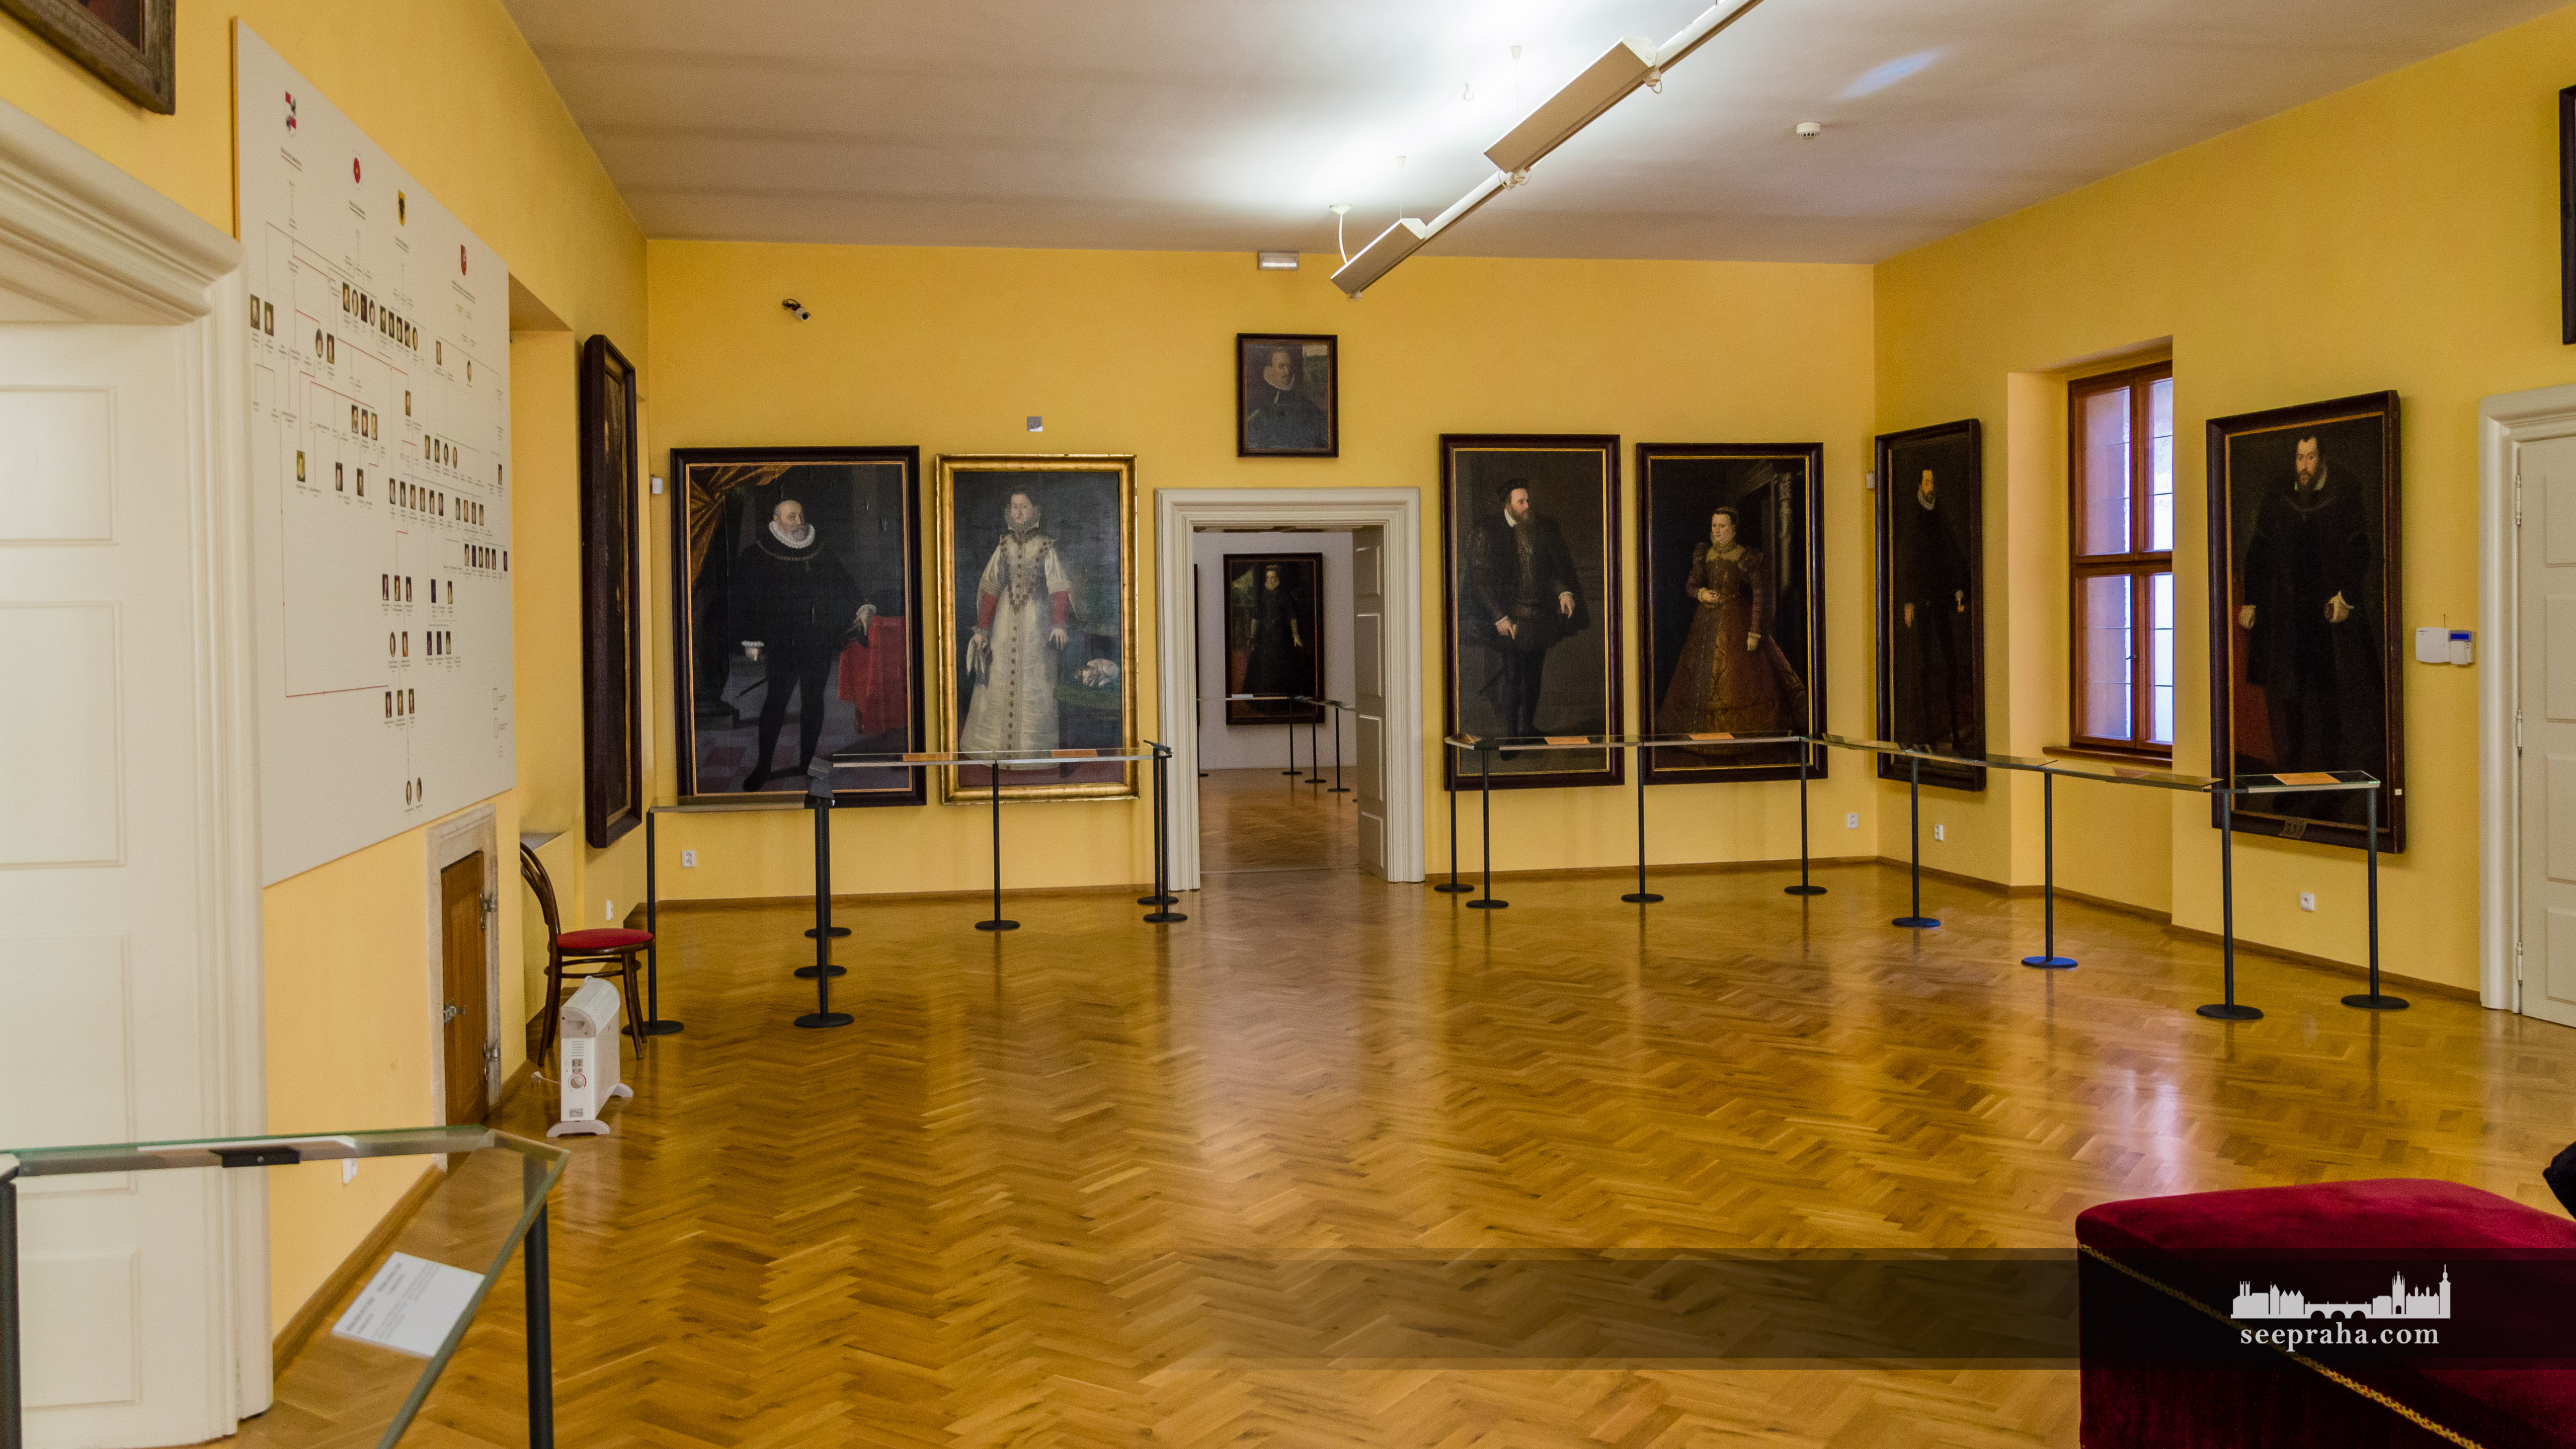 Музей в Лобковицком дворце (Пражский Град), Прага, Чехия